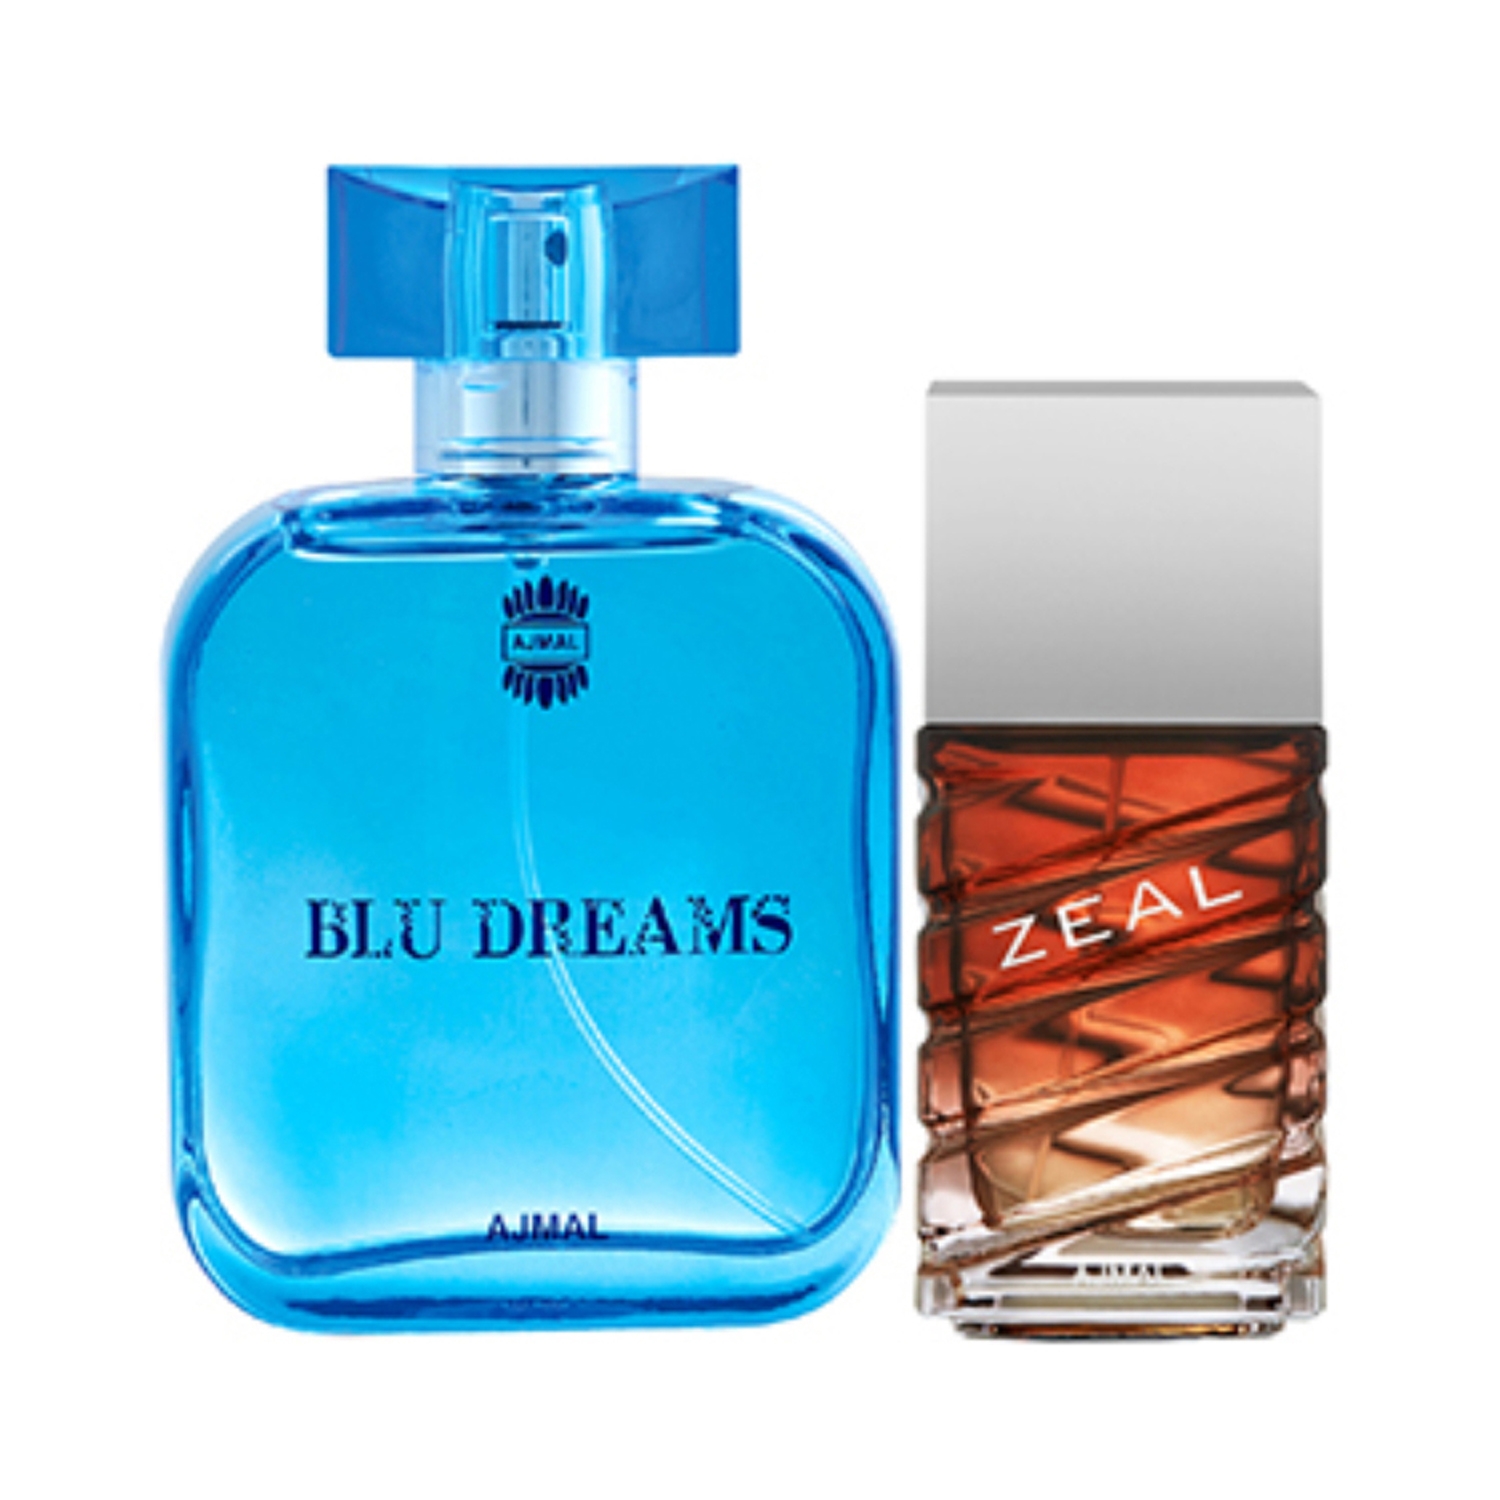 Ajmal | Ajmal Blu Dreams Eau De Parfum Citurs Fruity Perfume And Zeal Eau De Parfum Aquatic Woody Perfume - (2Pcs)